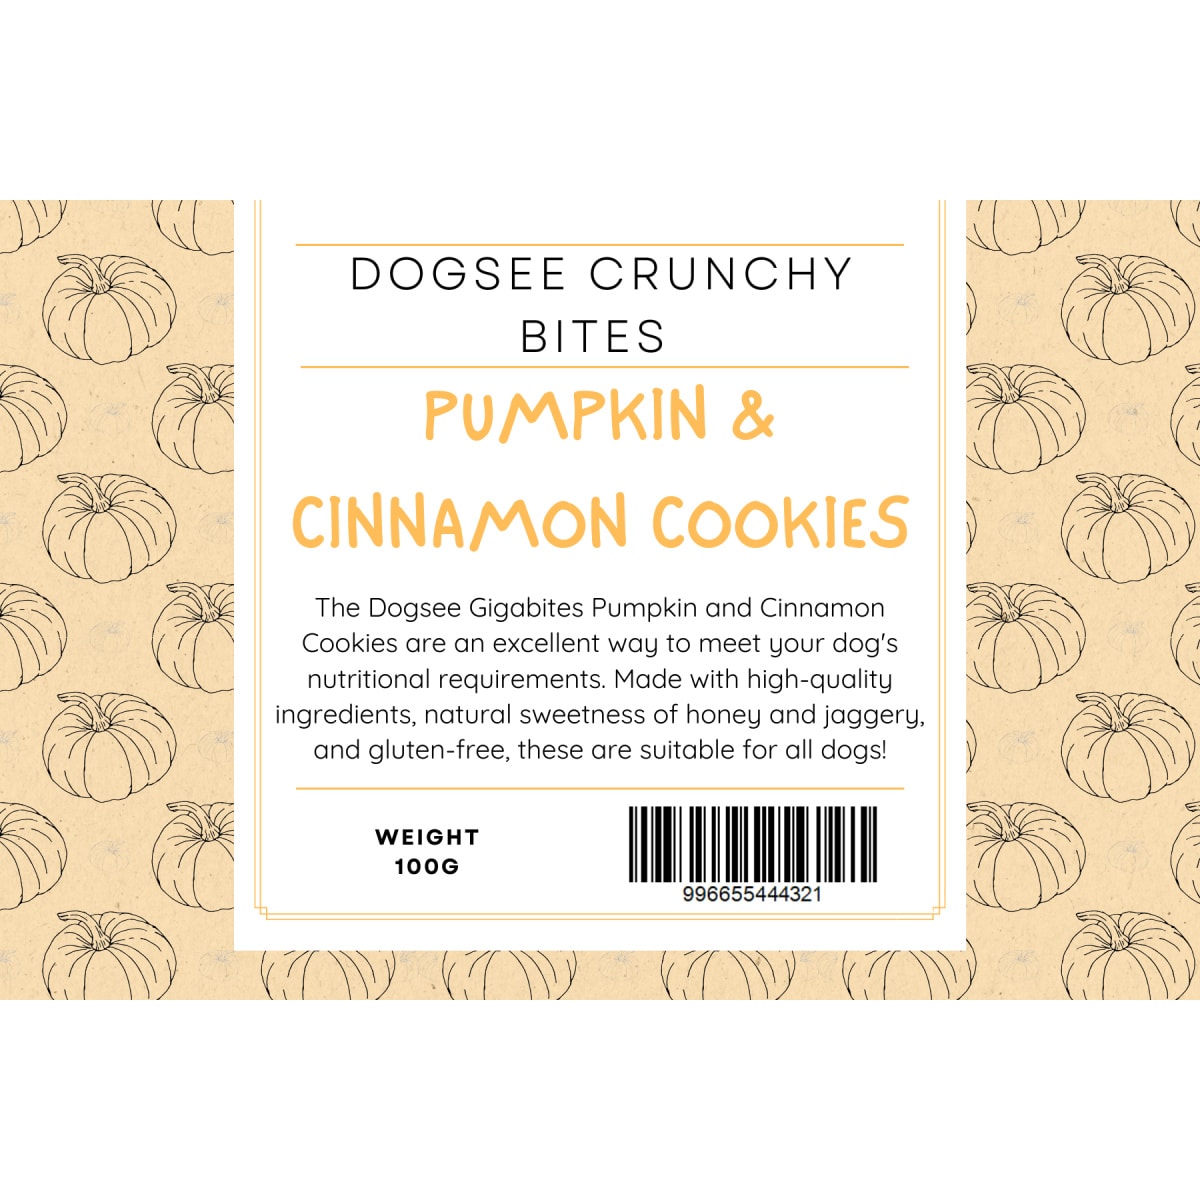 Dogsee Pumpkin and Cinnamon Cookies 100g Main Image